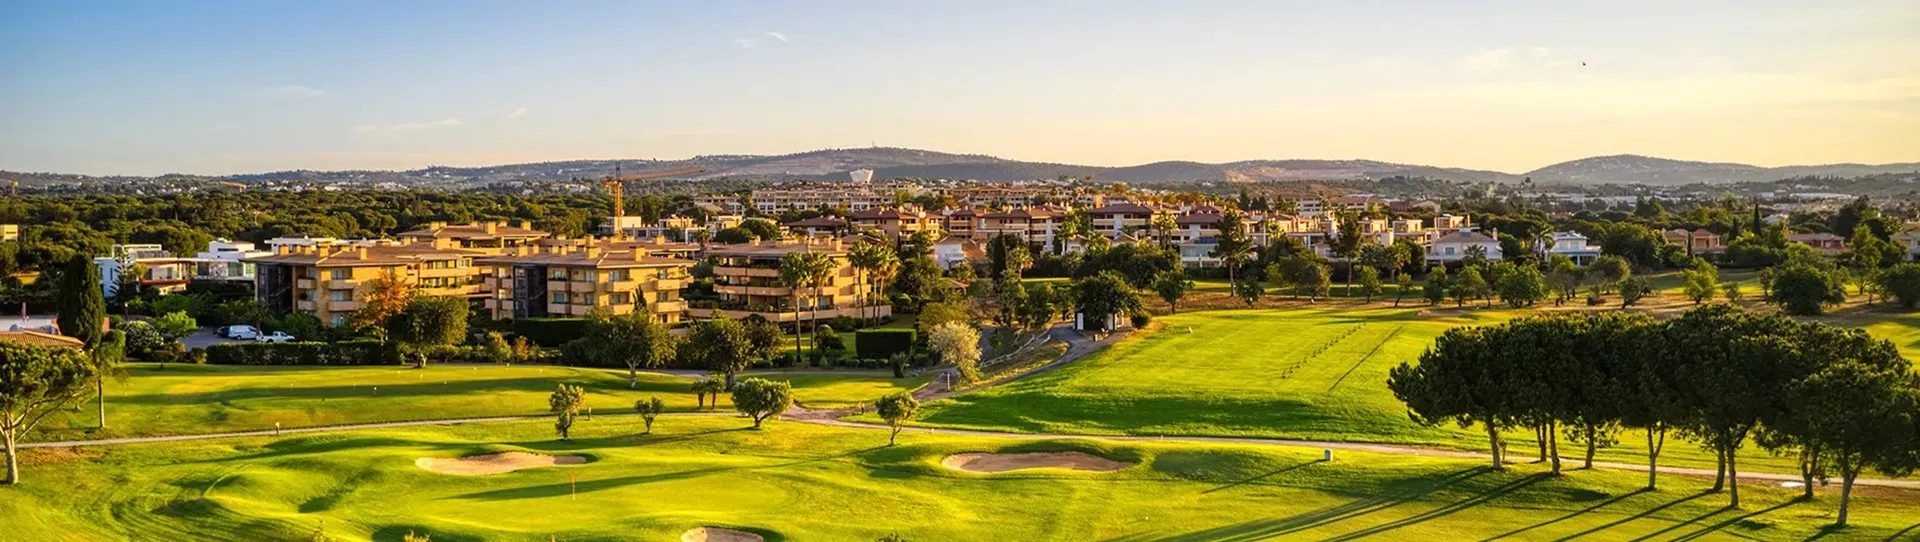 Portugal golf courses - Vilamoura Millennium Golf Course - Photo 1